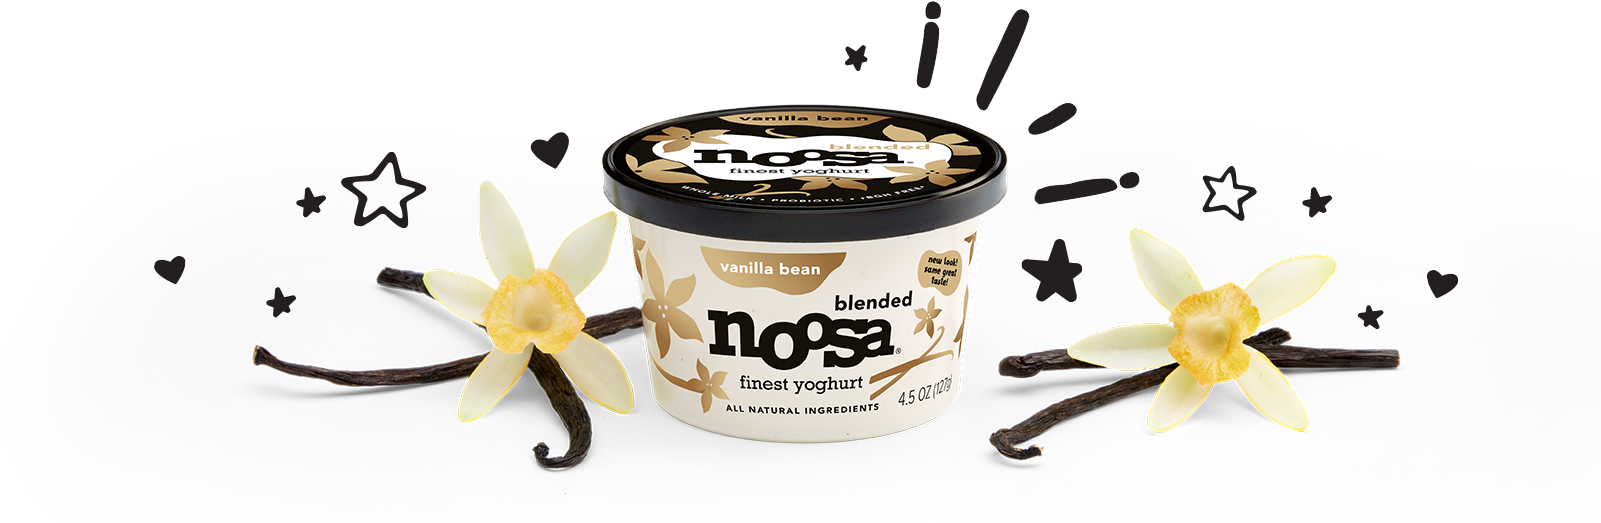 Noosa Vanilla Bean Yogurt Product Display PNG